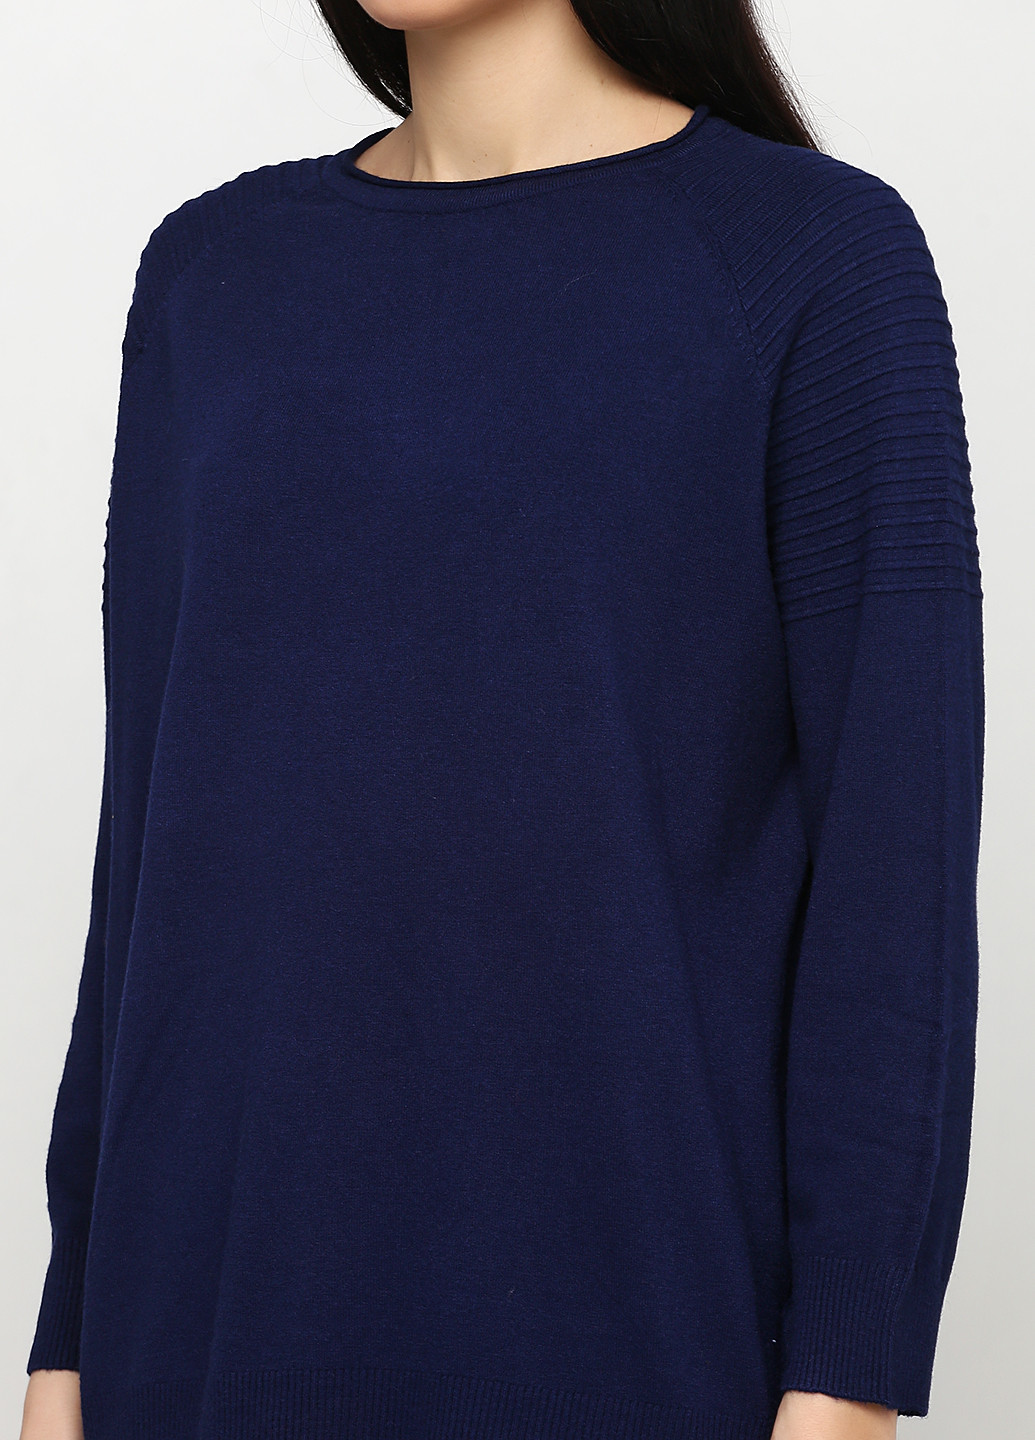 Темно-синий демисезонный свитер джемпер Made in Italy